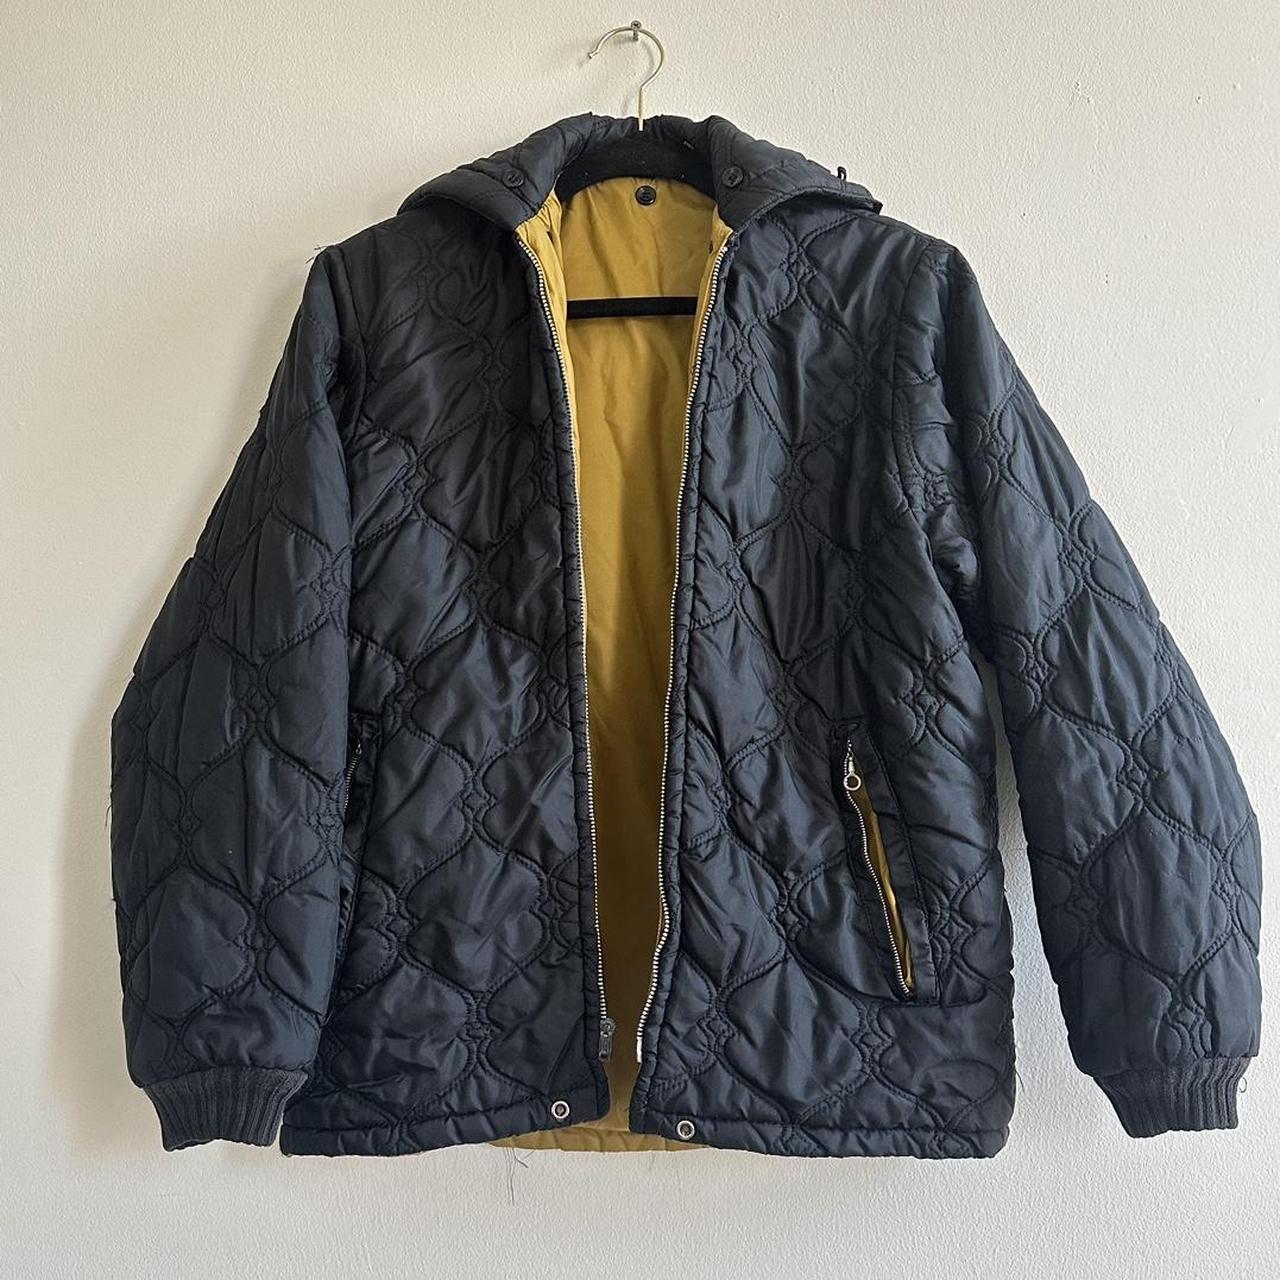 Vintage quilted black puffer coat jacket with... - Depop